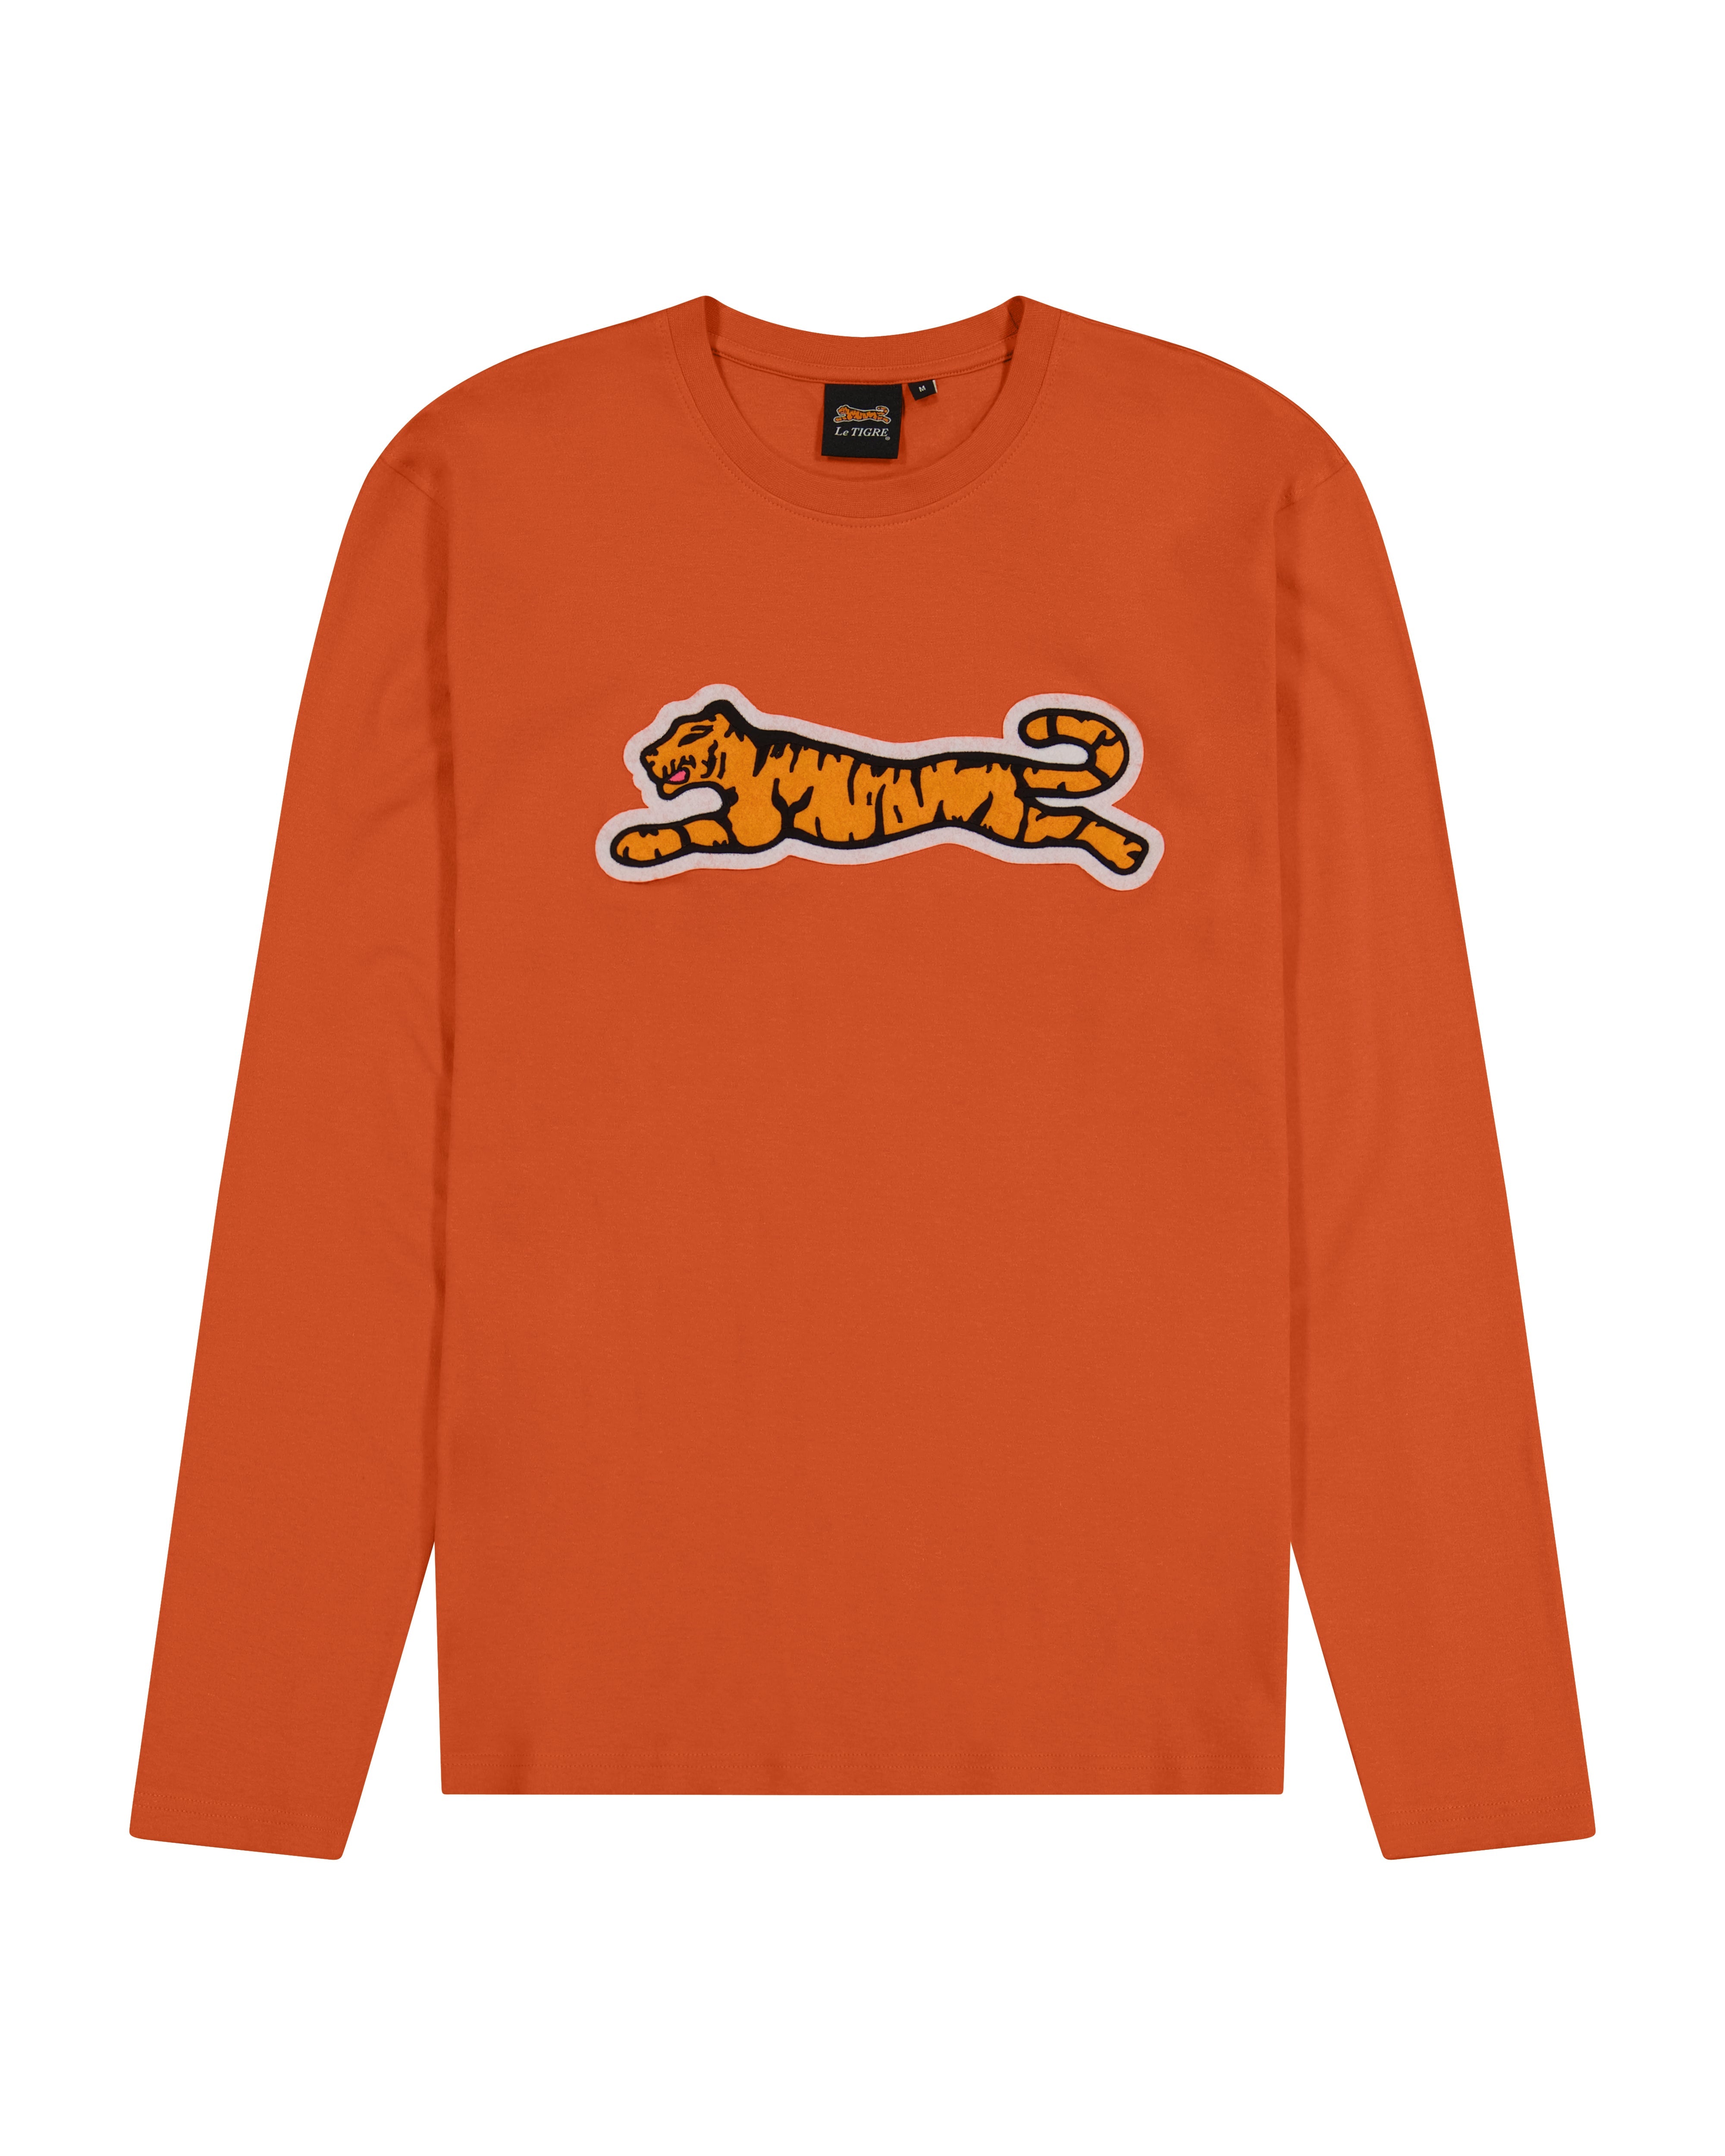 Men's T-Shirt - Orange - XXL